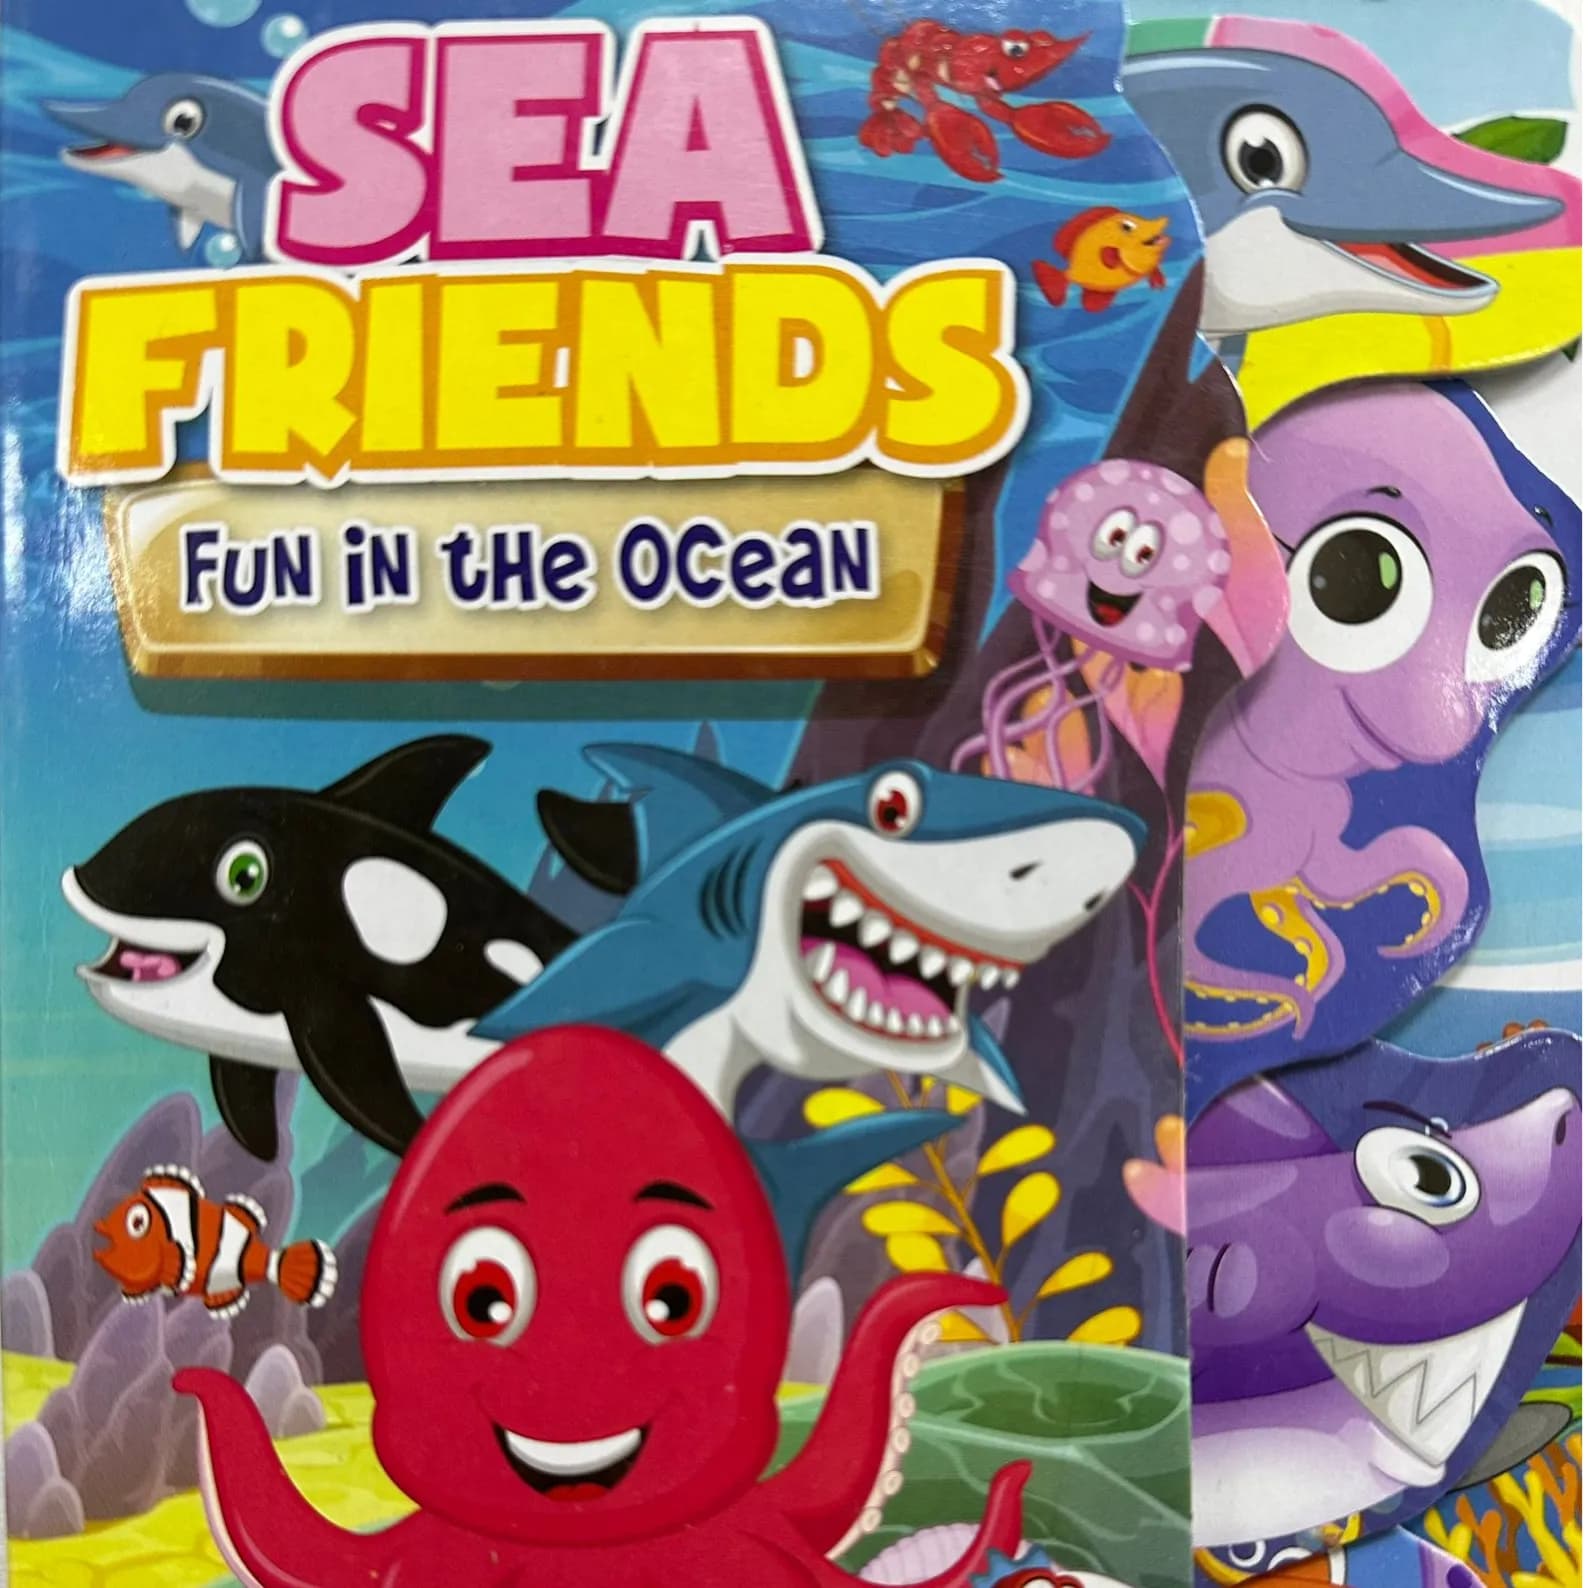 SEA FRIENDS - AN AMAZING BOARD BOOK